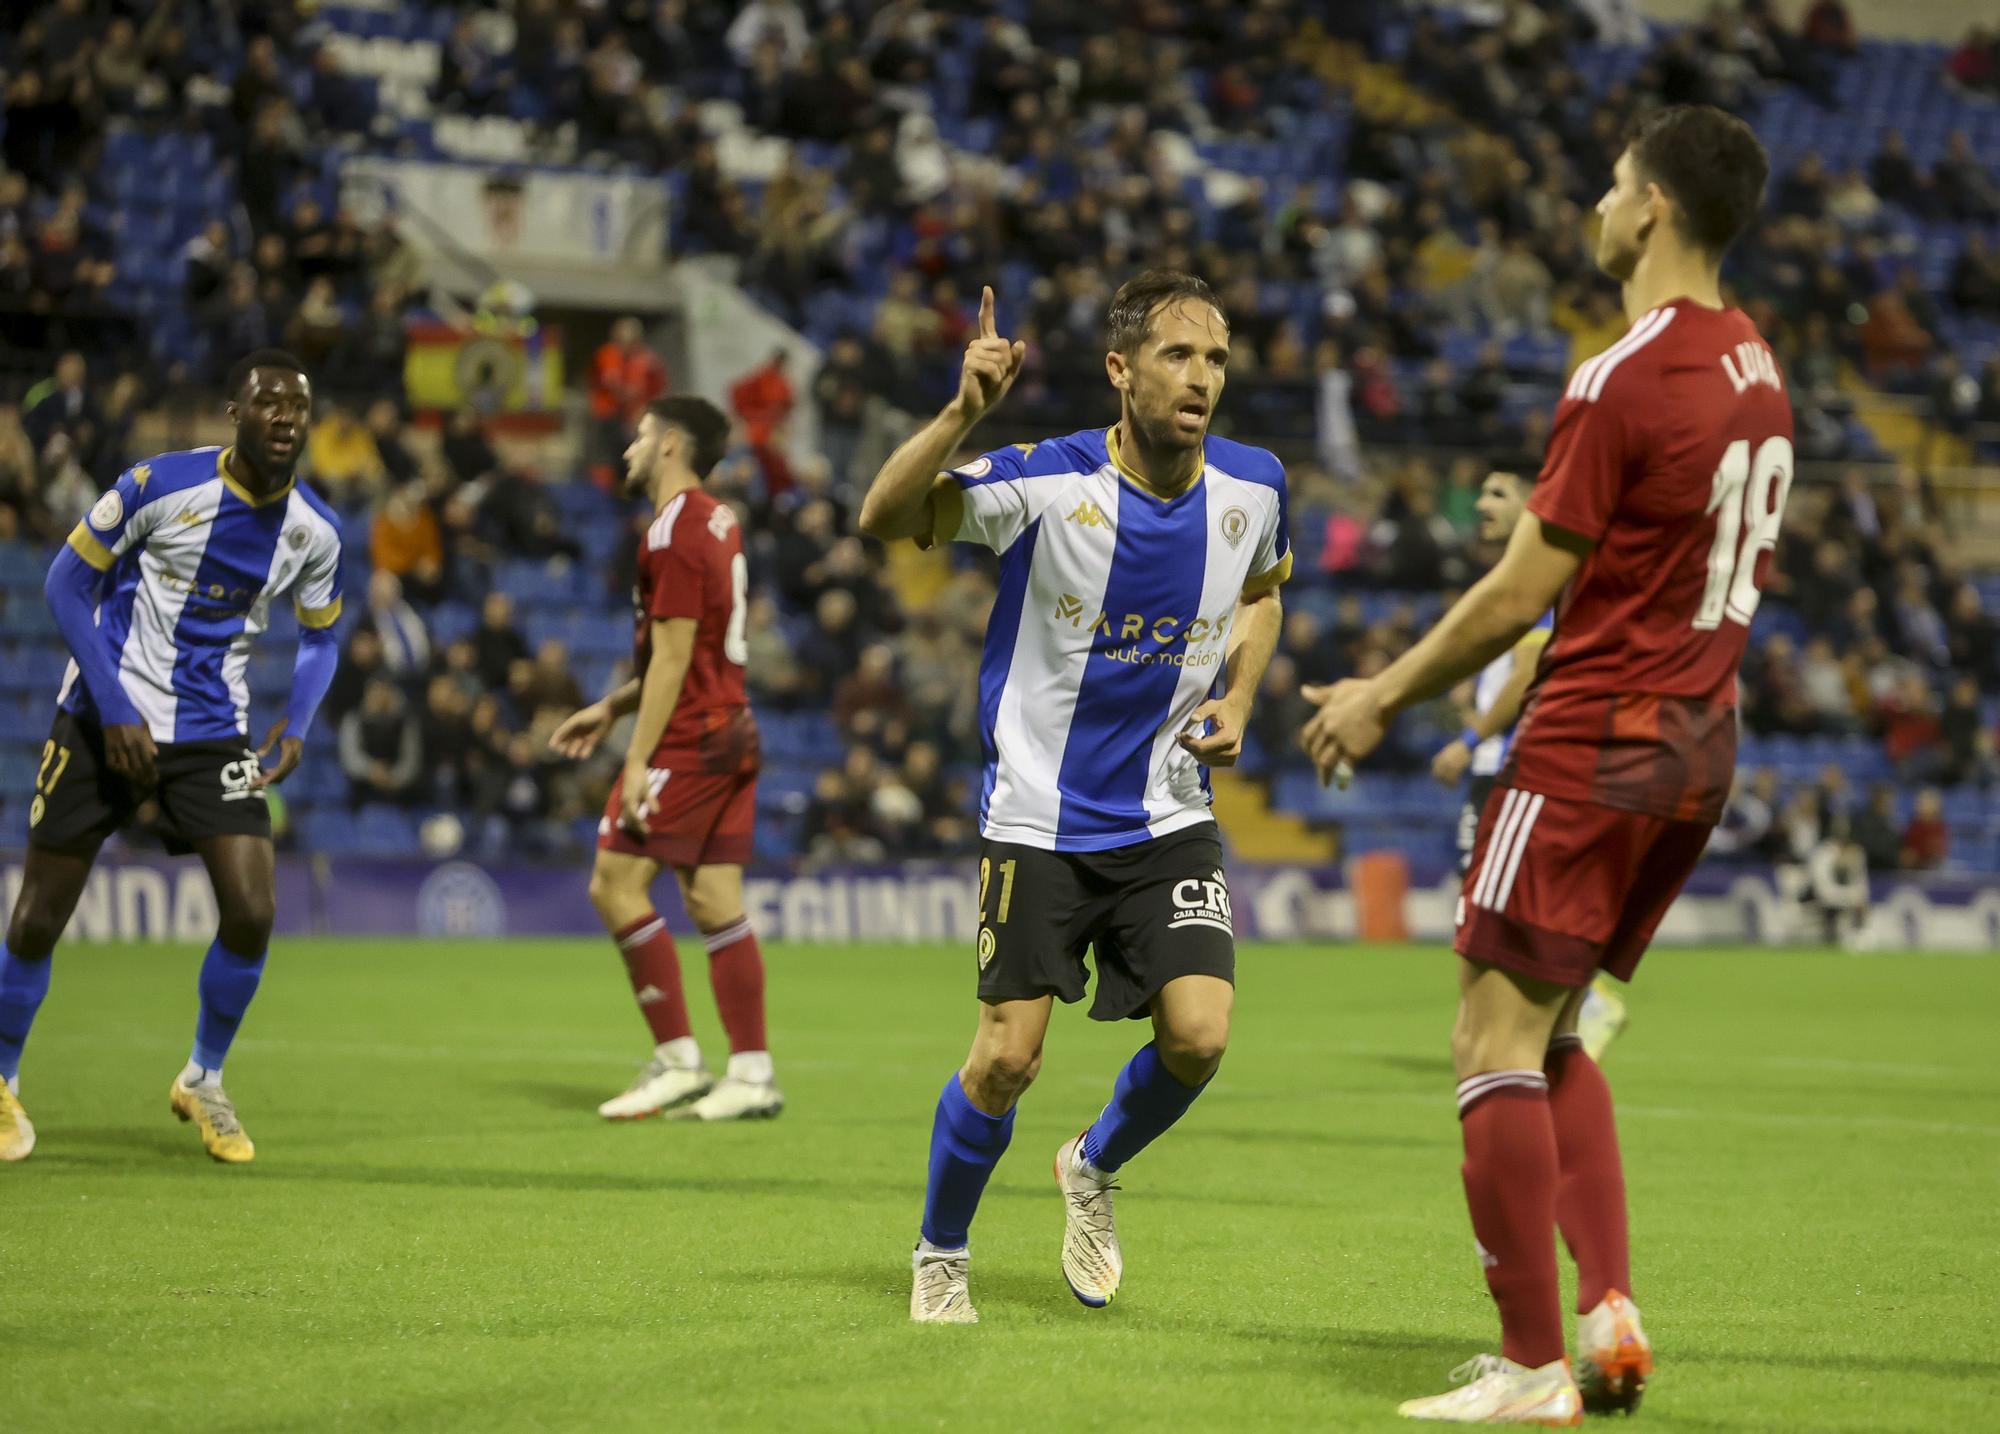 Hércules CF - Real Zaragoza B ( 3 - 1 )